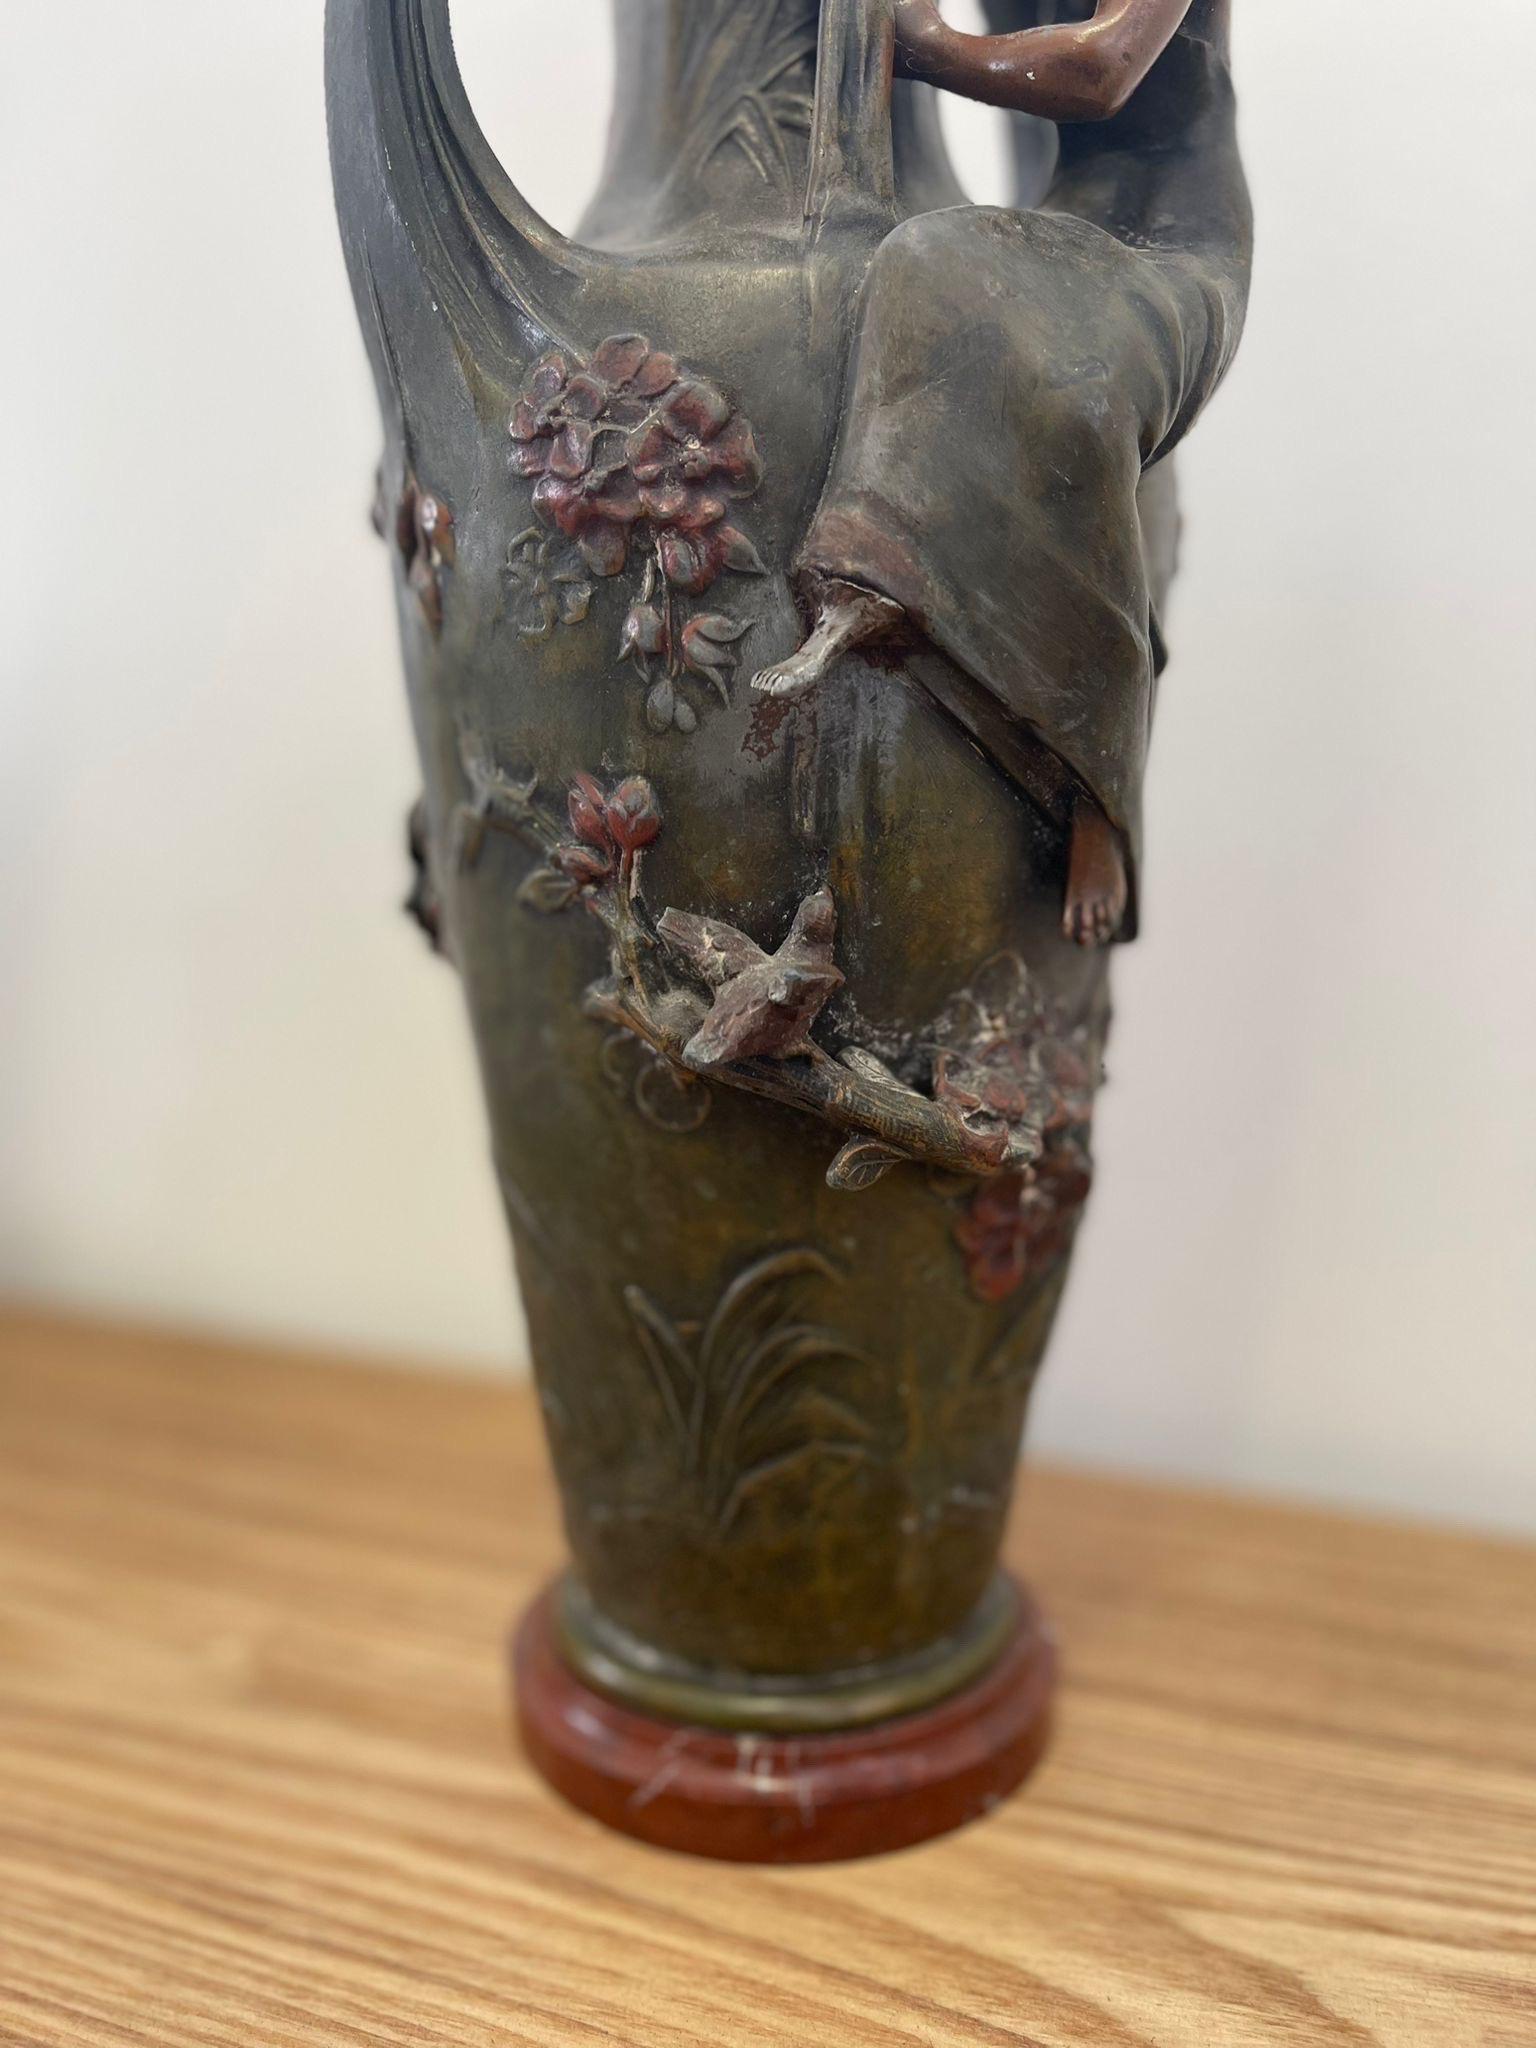 Metal Vintage Art Nouveau Era Vase With Feminine Figurine Sculpture and Floral Motif. For Sale